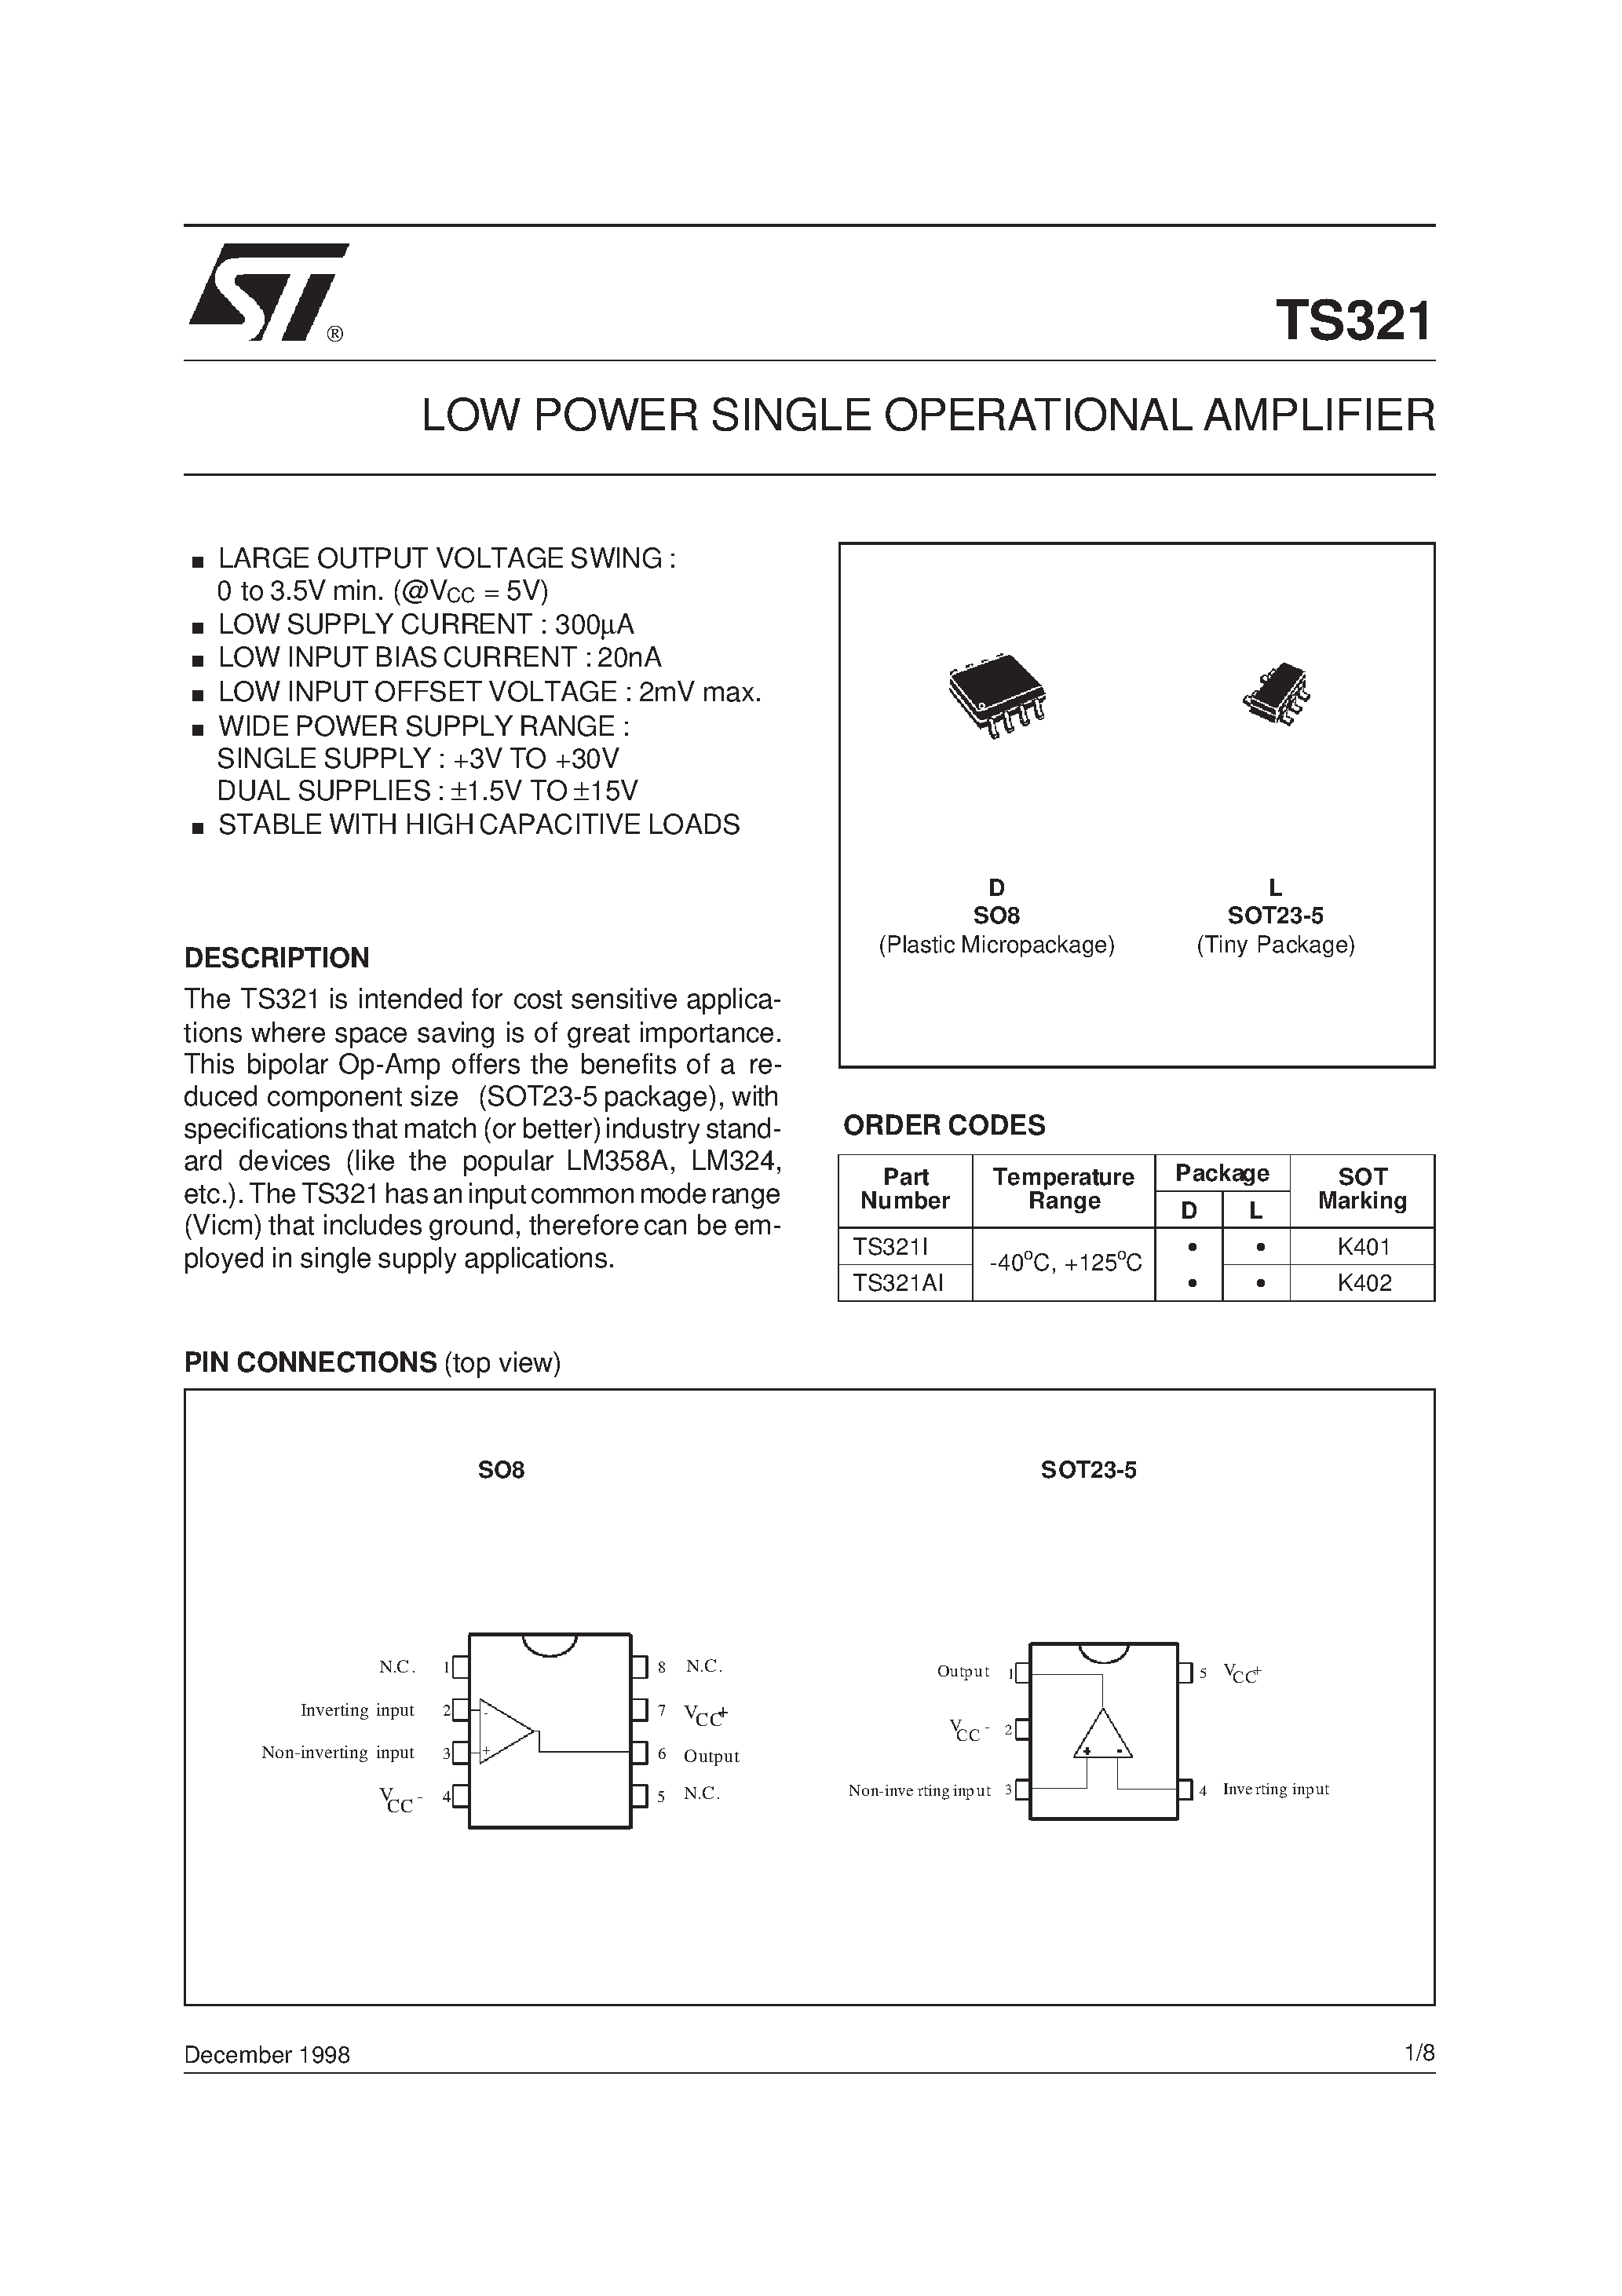 Datasheet TS321 - LOW POWER SINGLE OPERATIONAL AMPLIFIER page 1